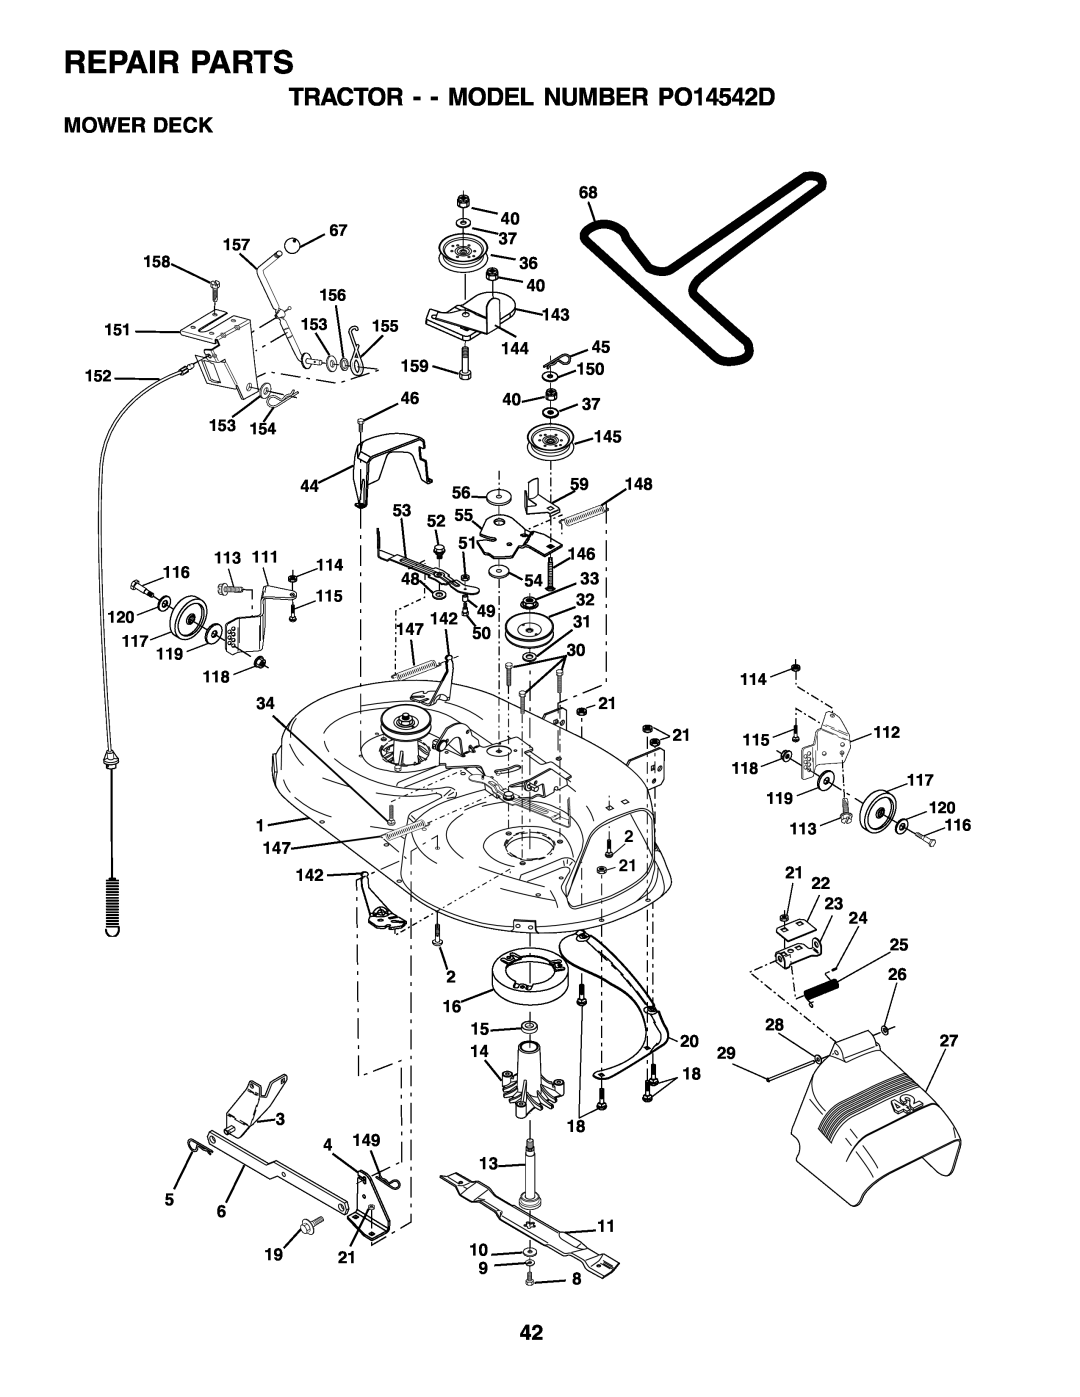 Poulan 179416 manual Repair Parts, TRACTOR - - MODEL NUMBER PO14542D, Mower Deck 